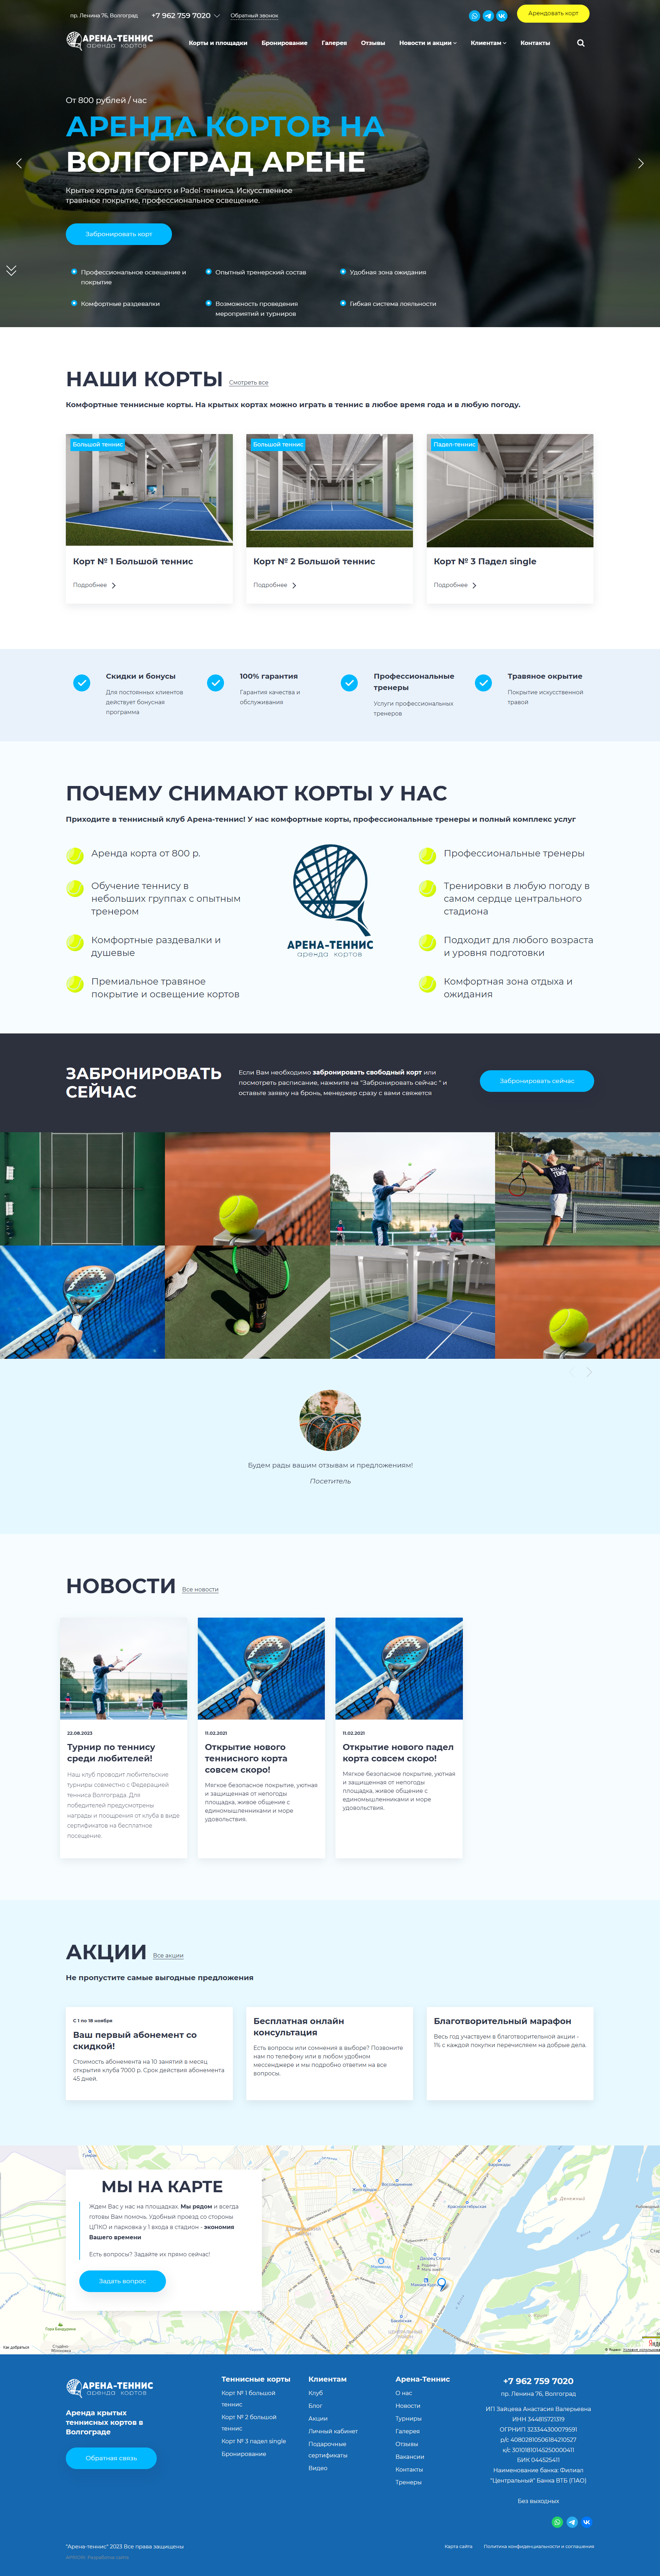 корпоративный сайт компании «арена-теннис»